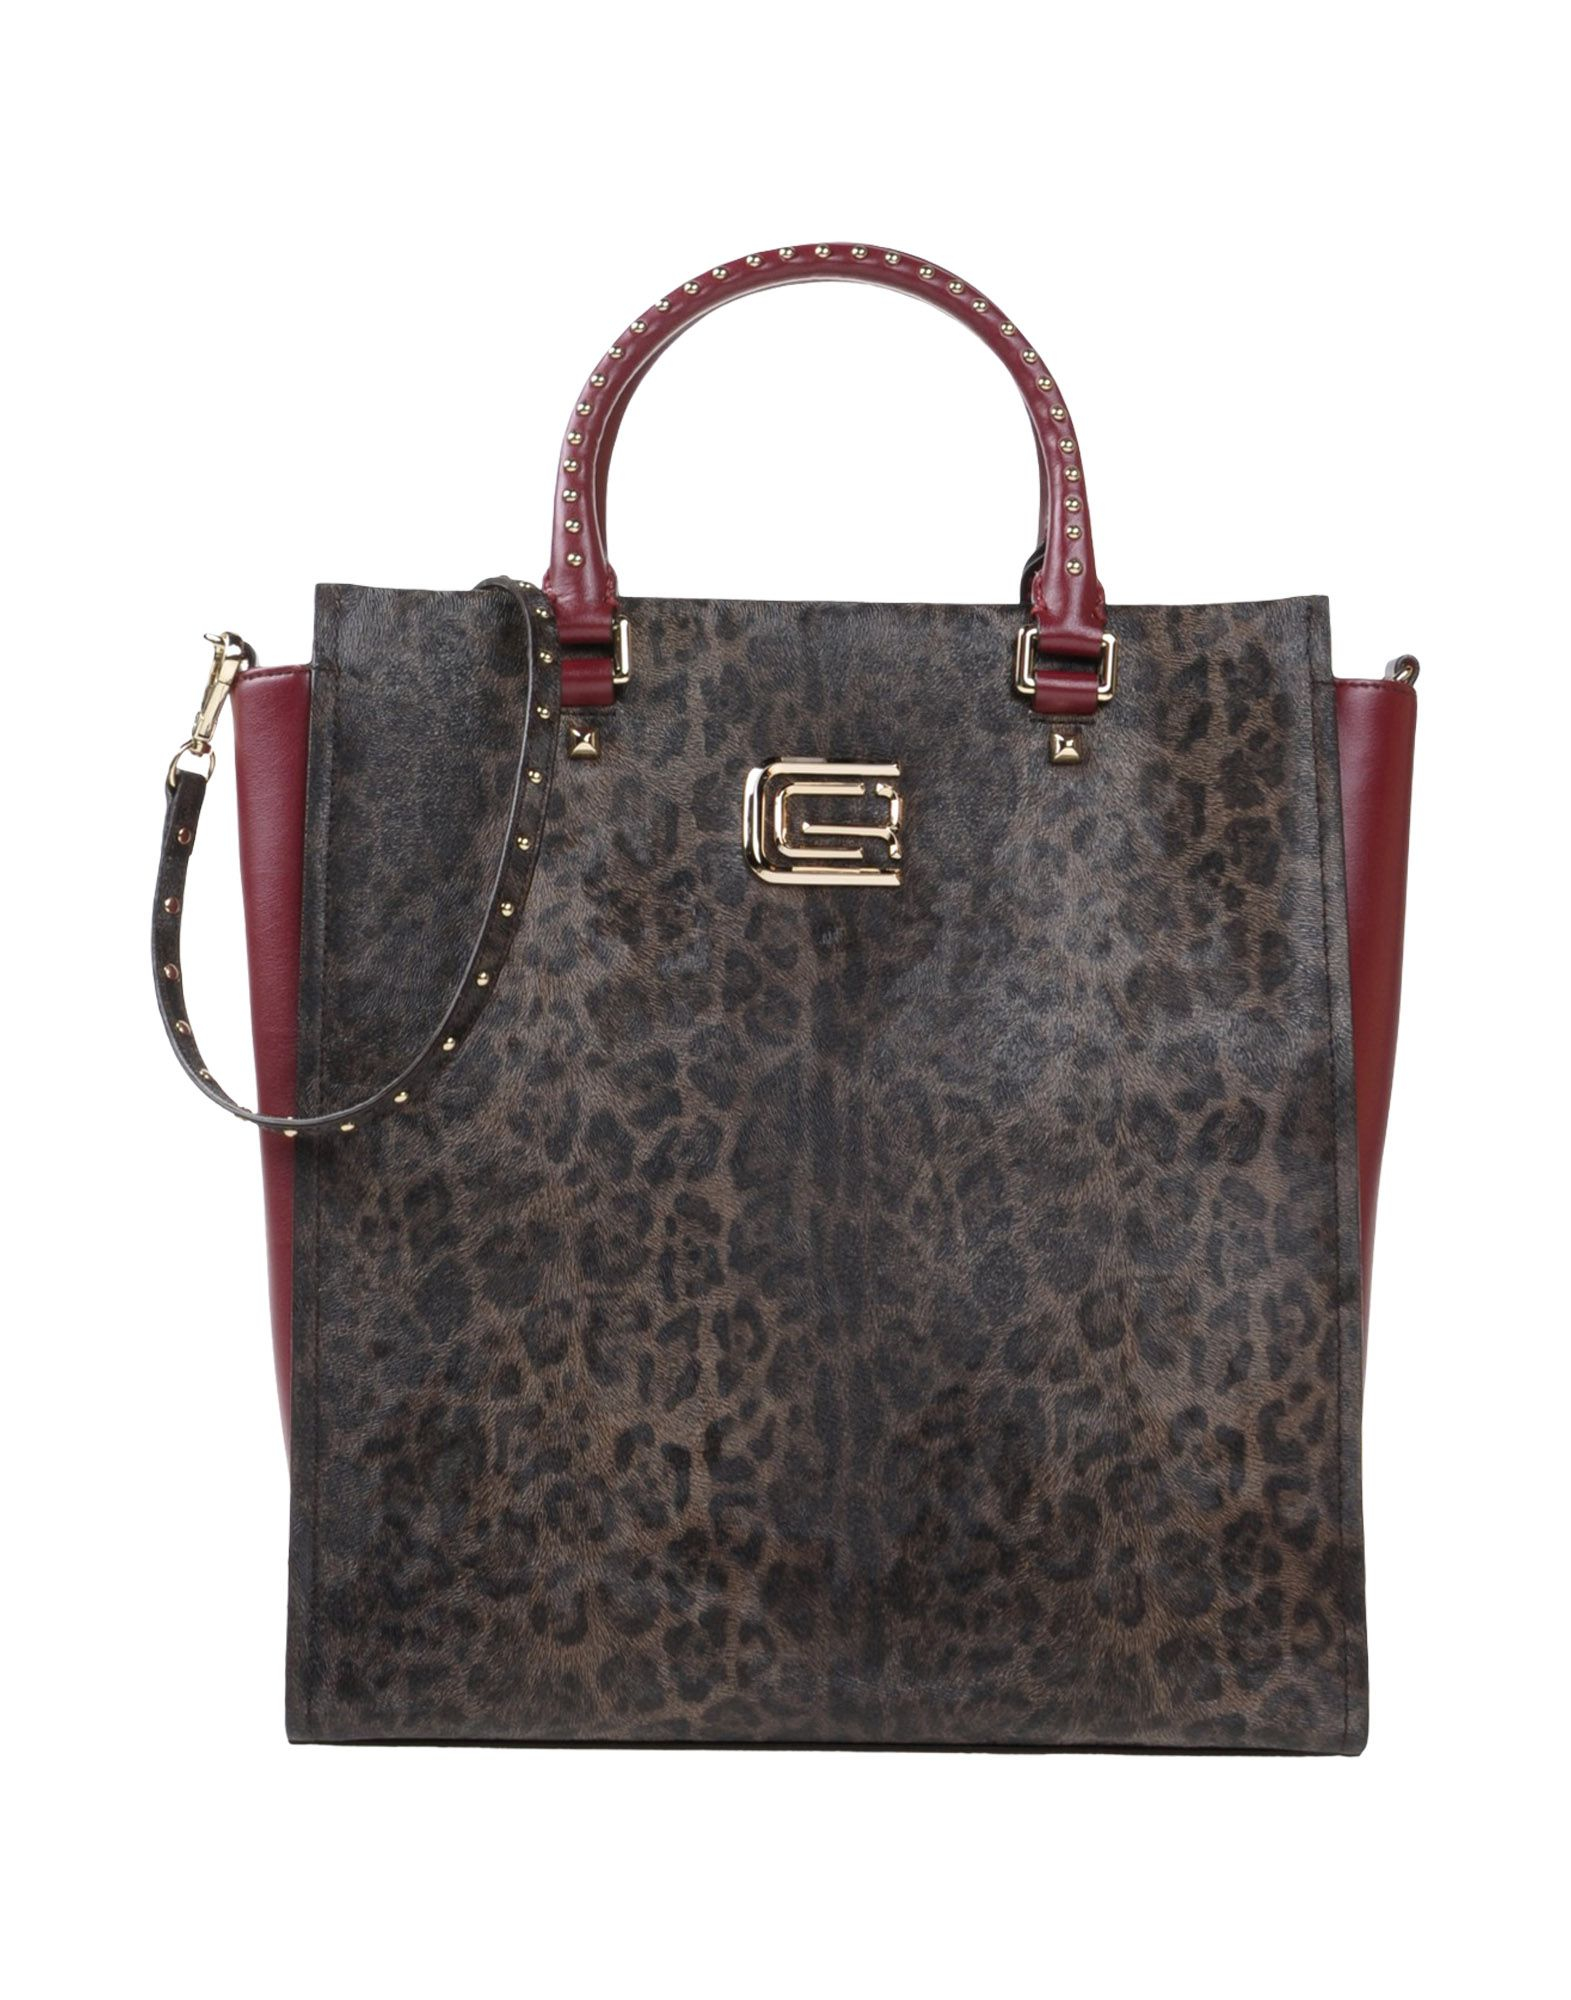 Dior Handbags At Neiman Marcus: Roberto Cavalli Purses Handbag